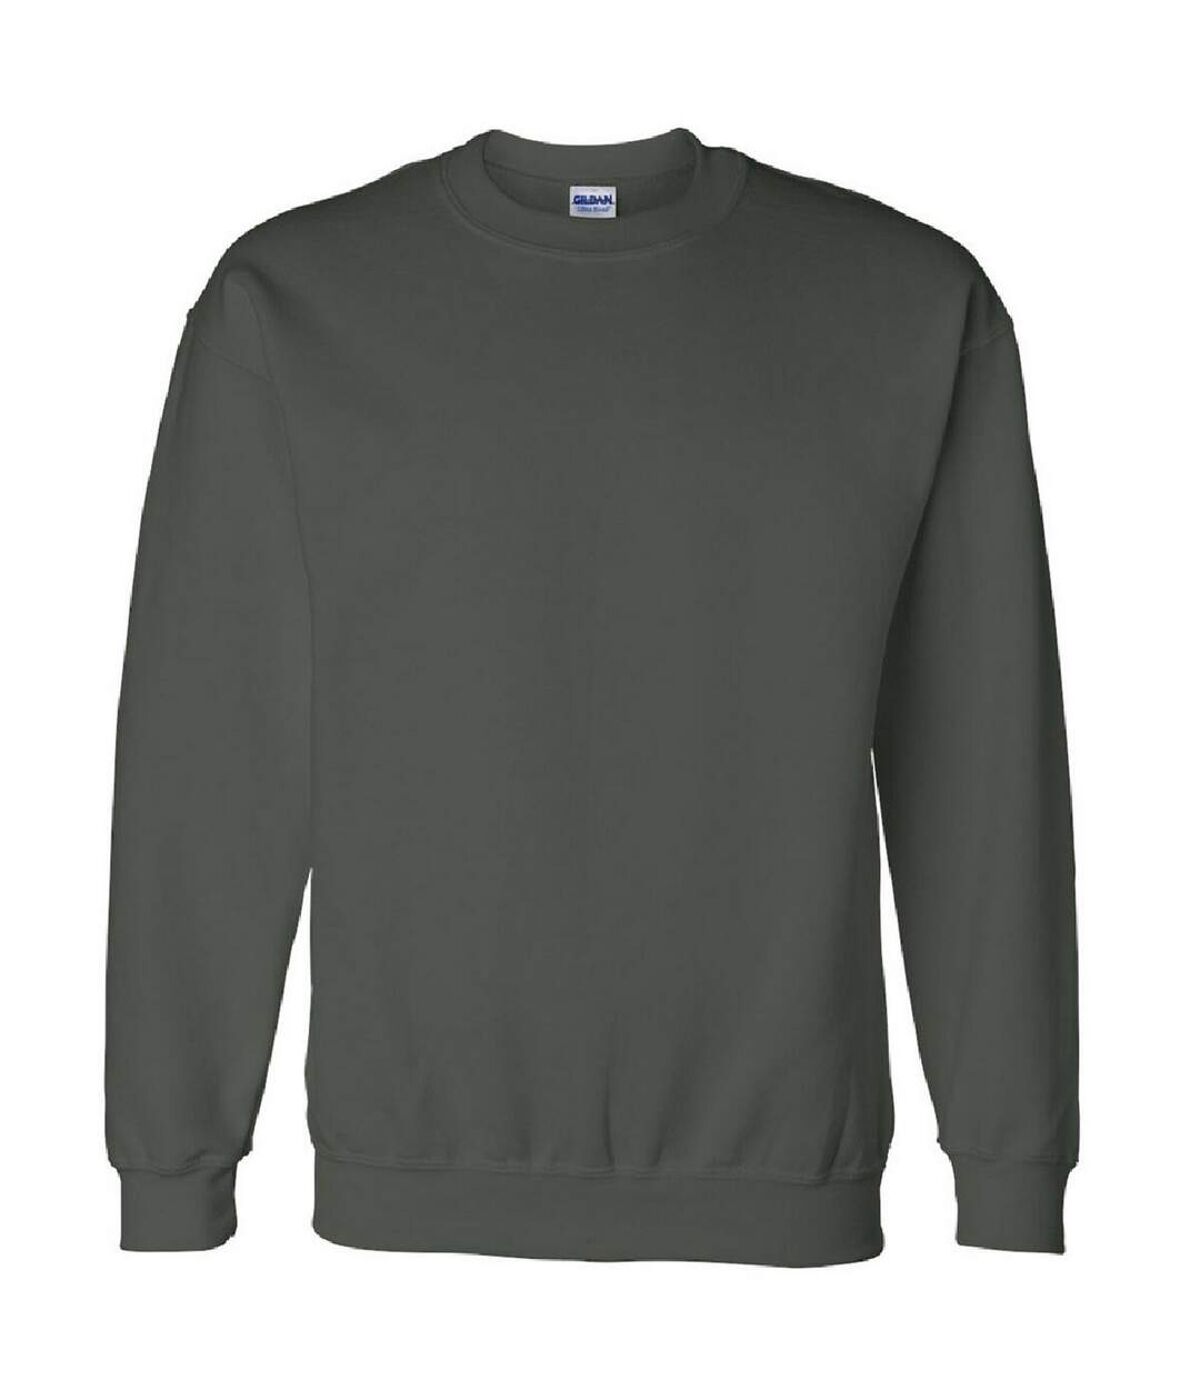 Gildan DryBlend Adult Set-In Crew Neck Sweatshirt (13 Colours) (Forest Green)